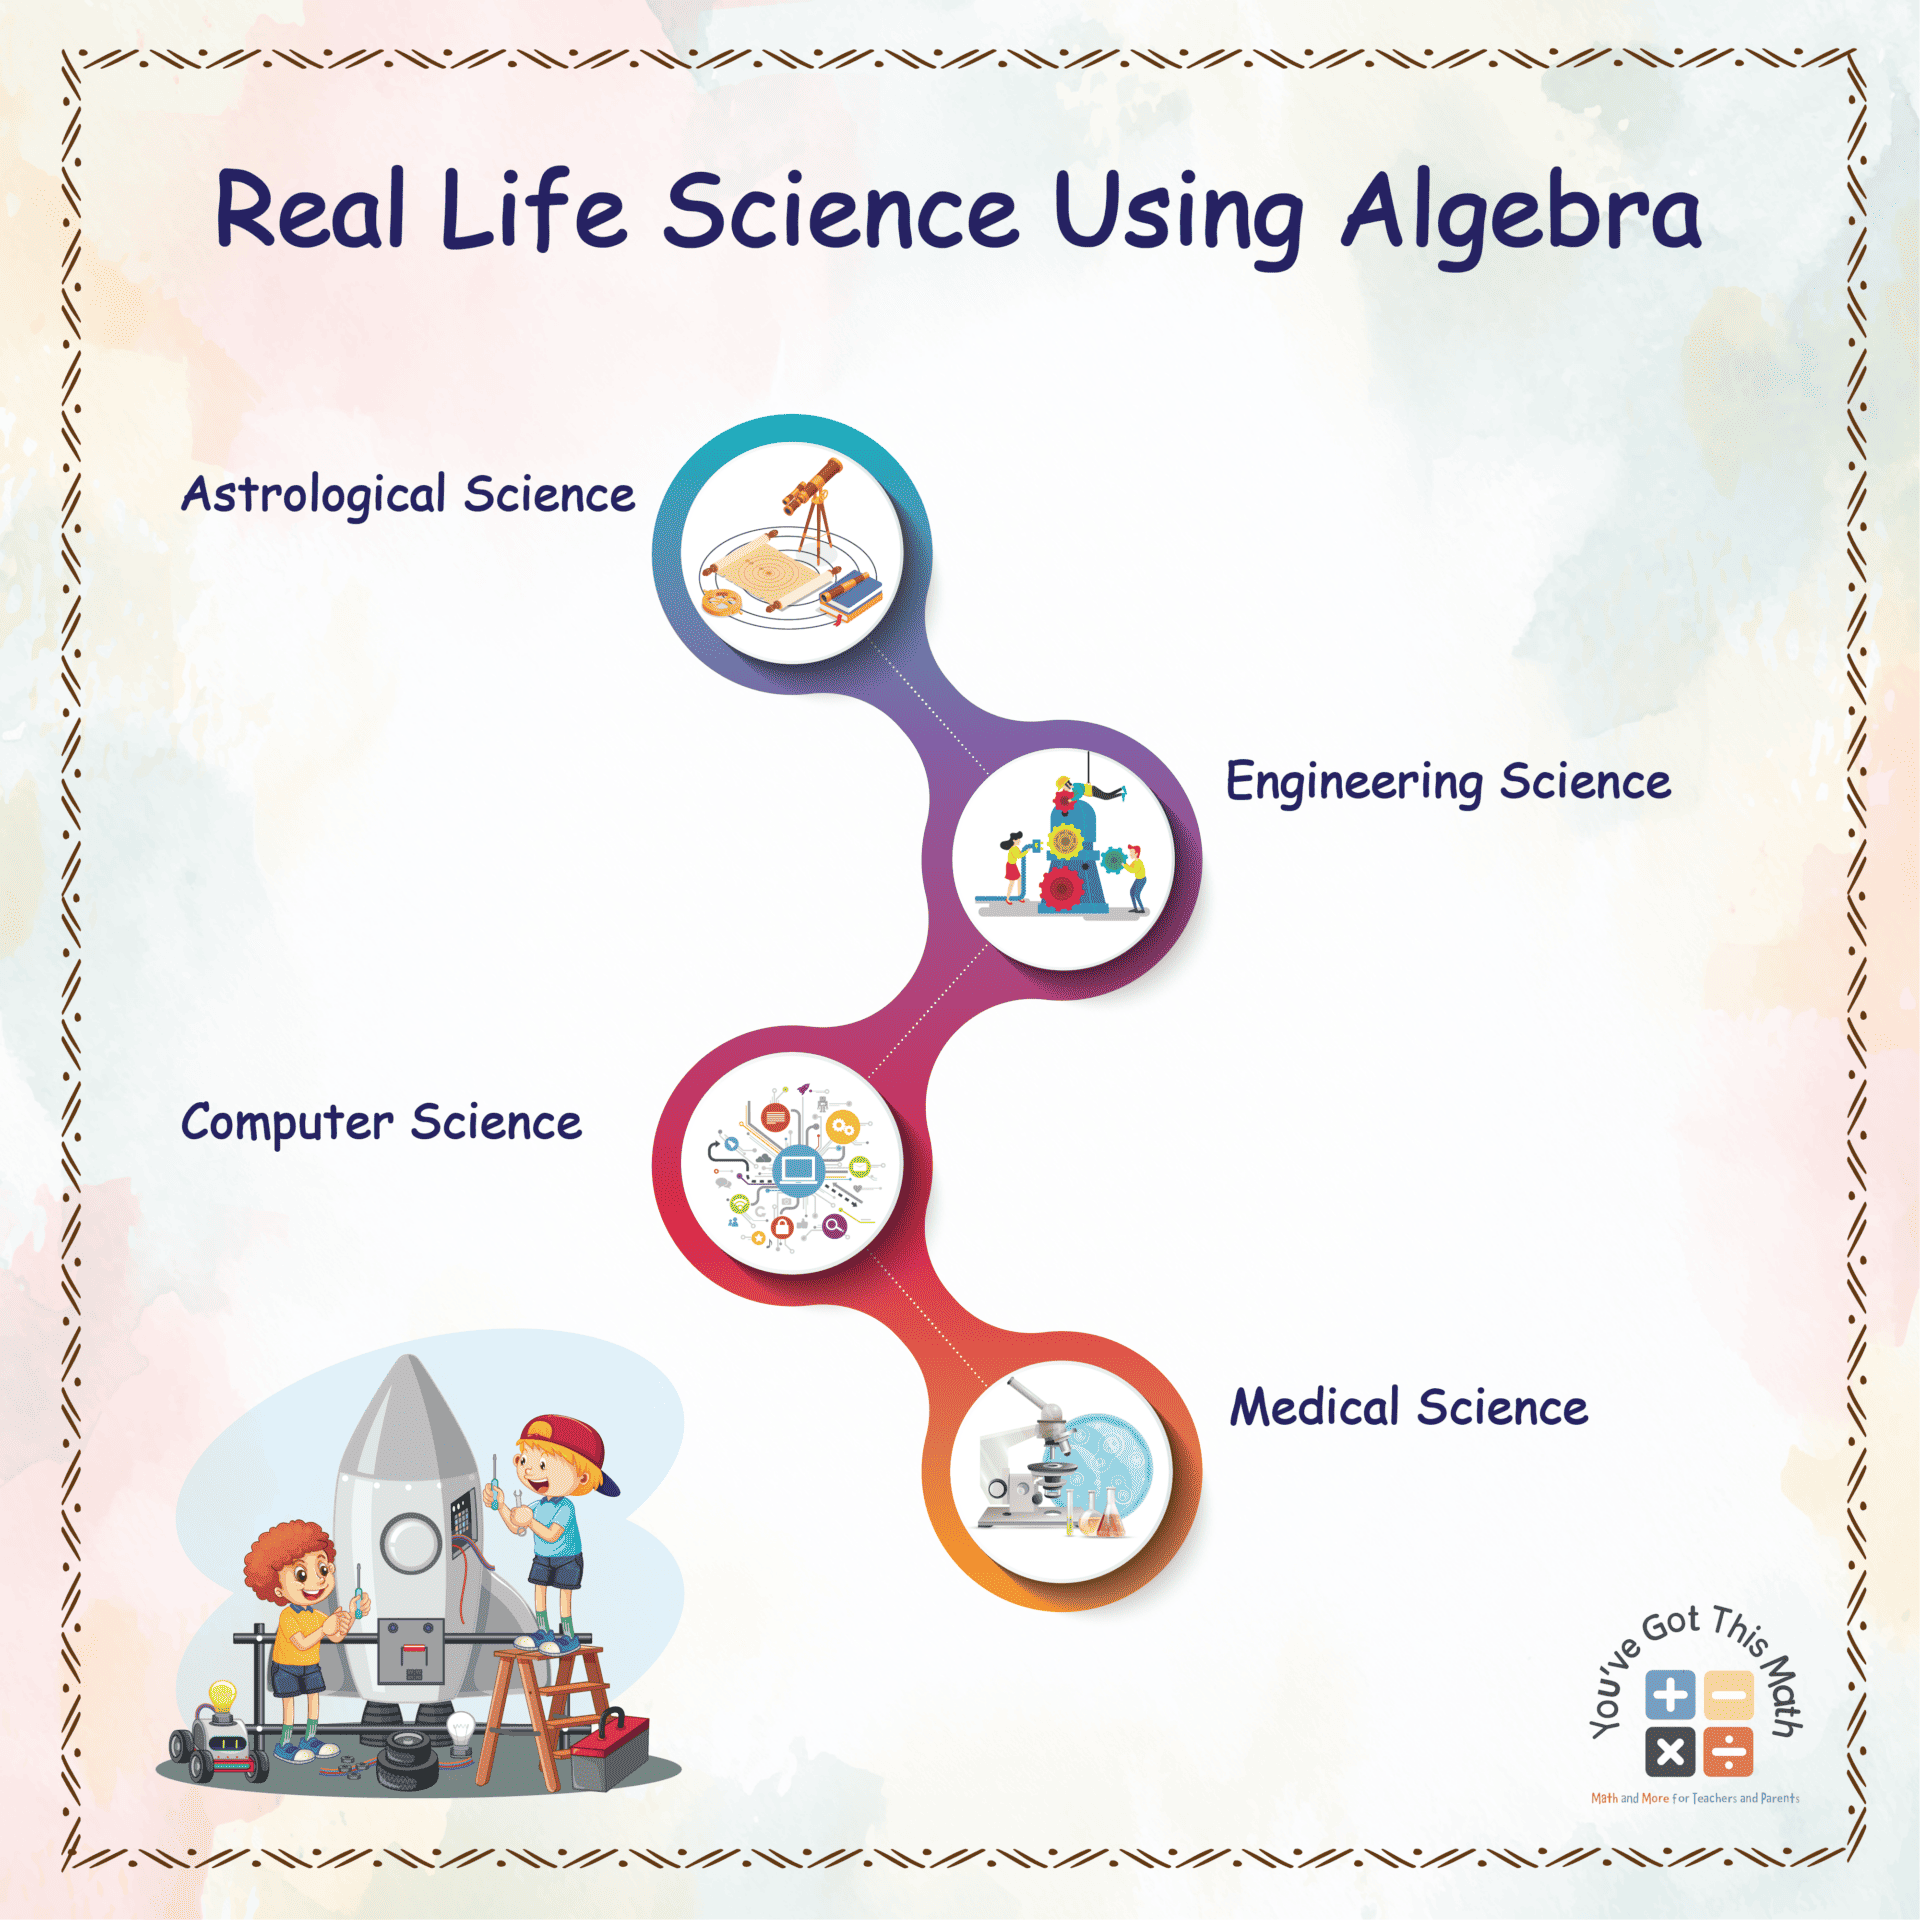 Real Life Science Using Algebra